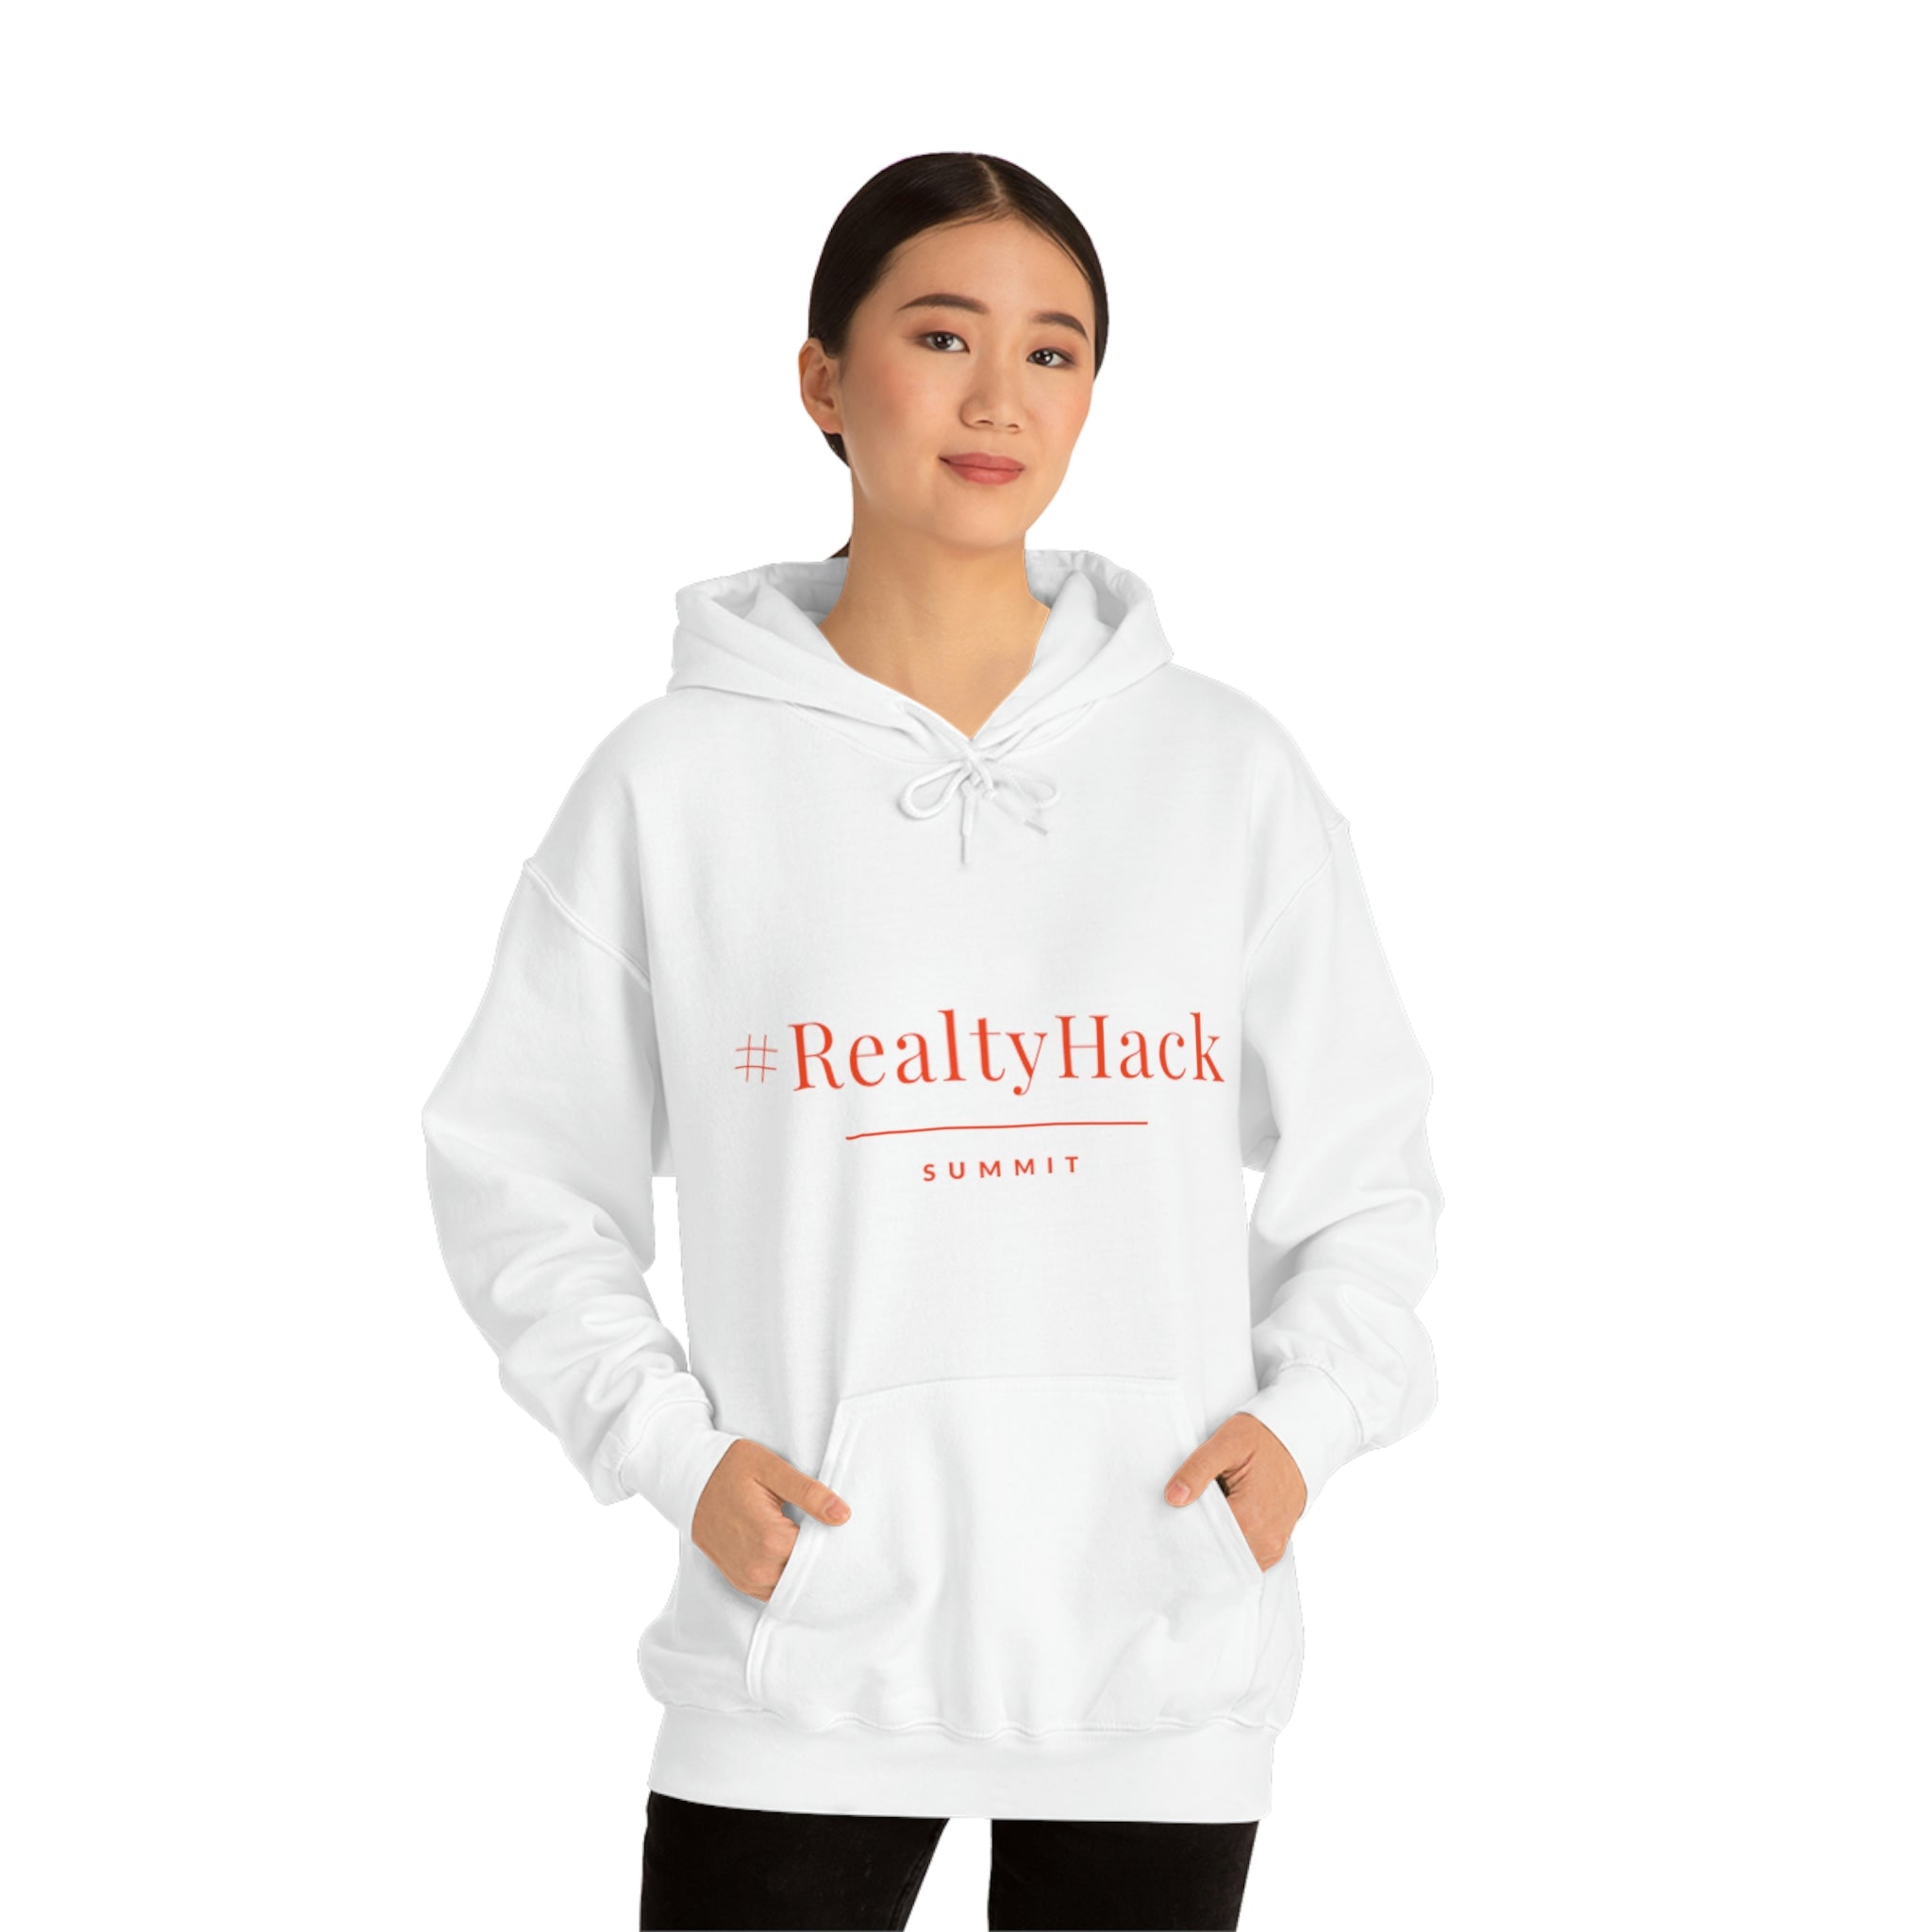 #RealtyHack Summit Hooded Sweatshirt